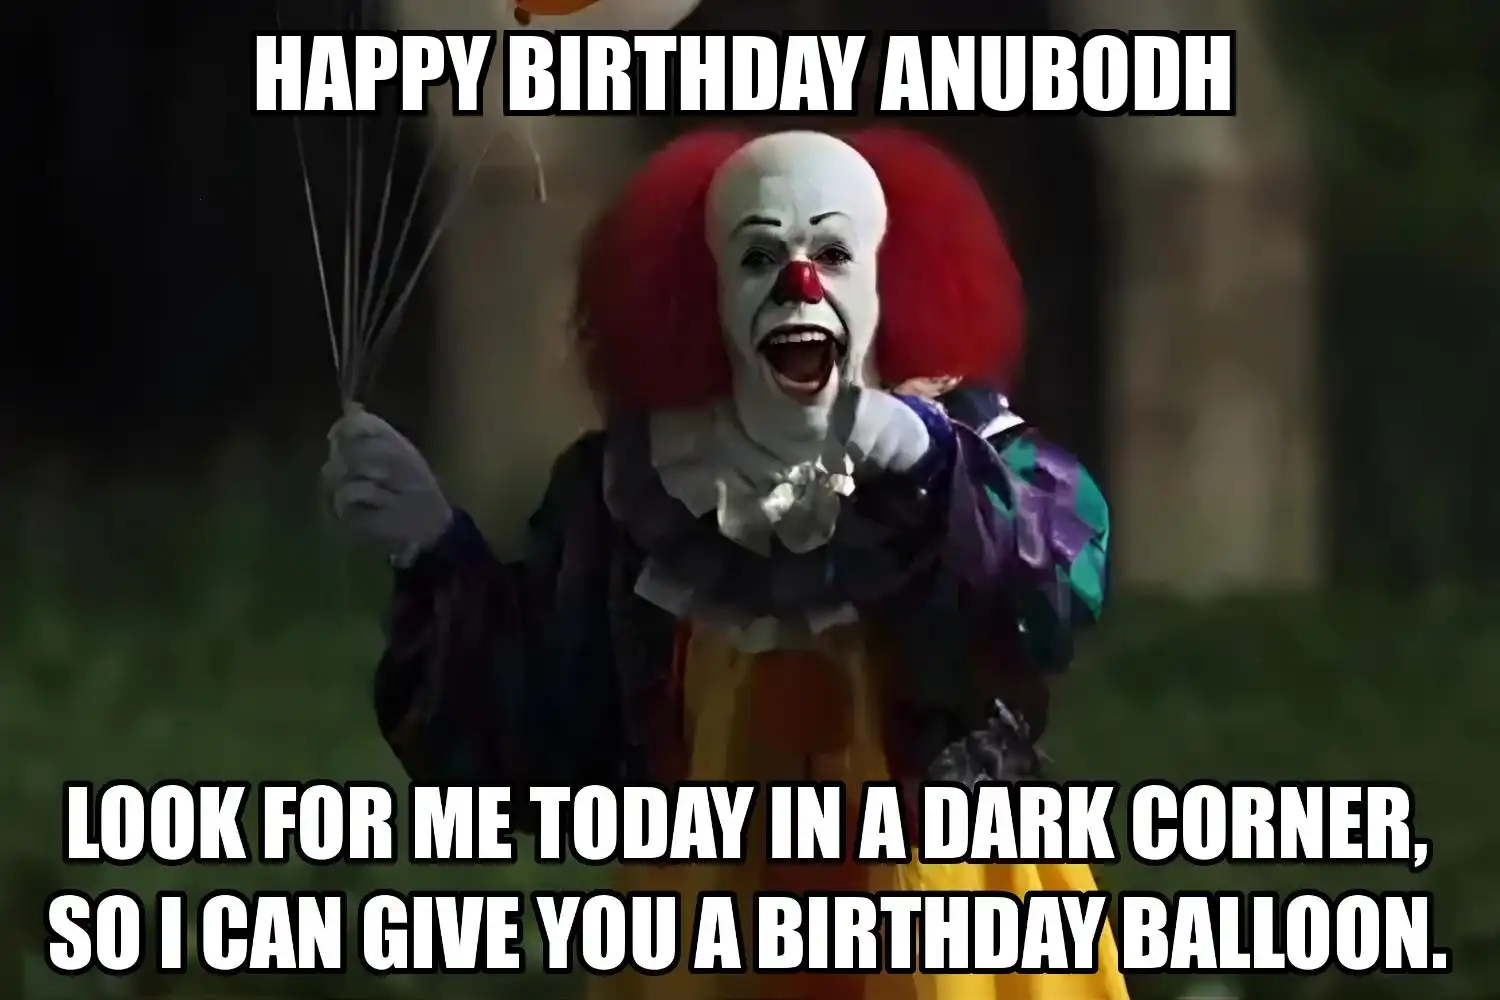 Happy Birthday Anubodh I Can Give You A Balloon Meme